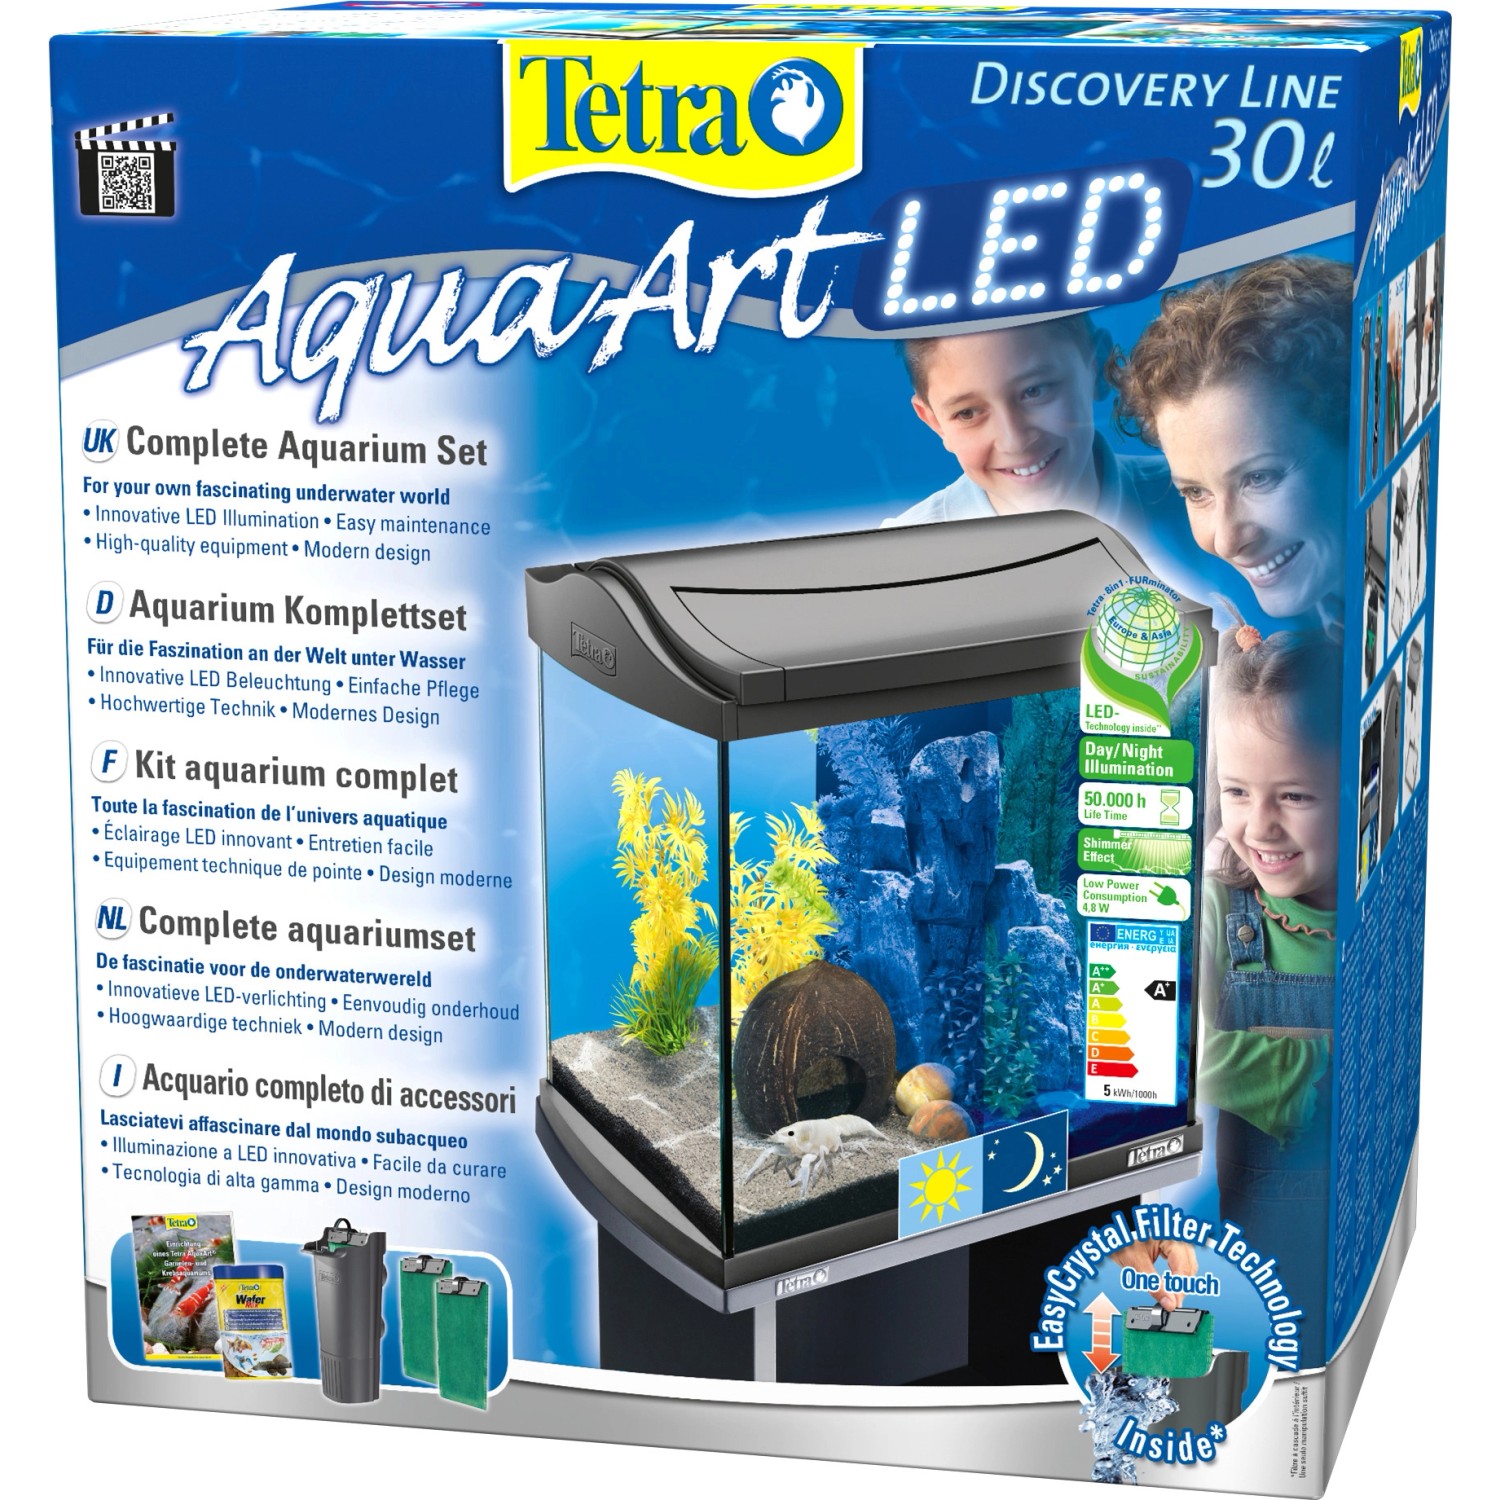 Tetra Aquarium-Set AquaArt Discovery Anthrazit Line kaufen bei l LED 30 OBI